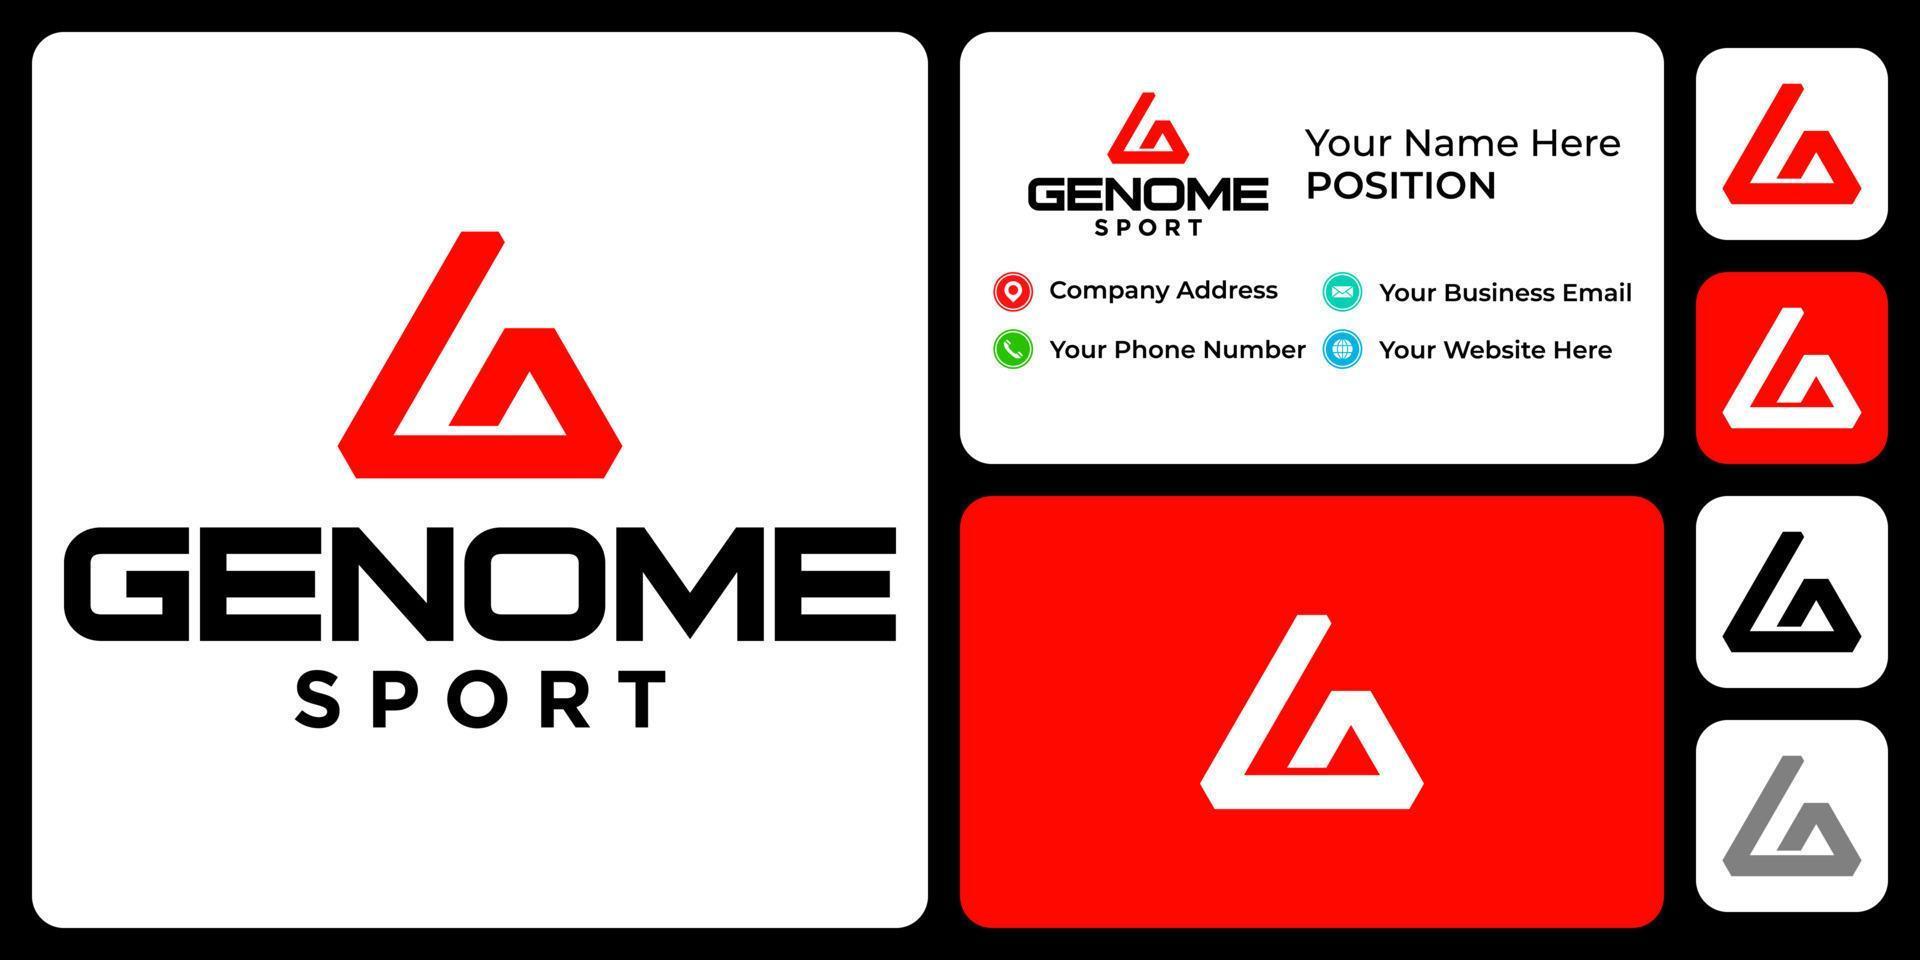 Letter G monogram sport logo design with business card template. vector